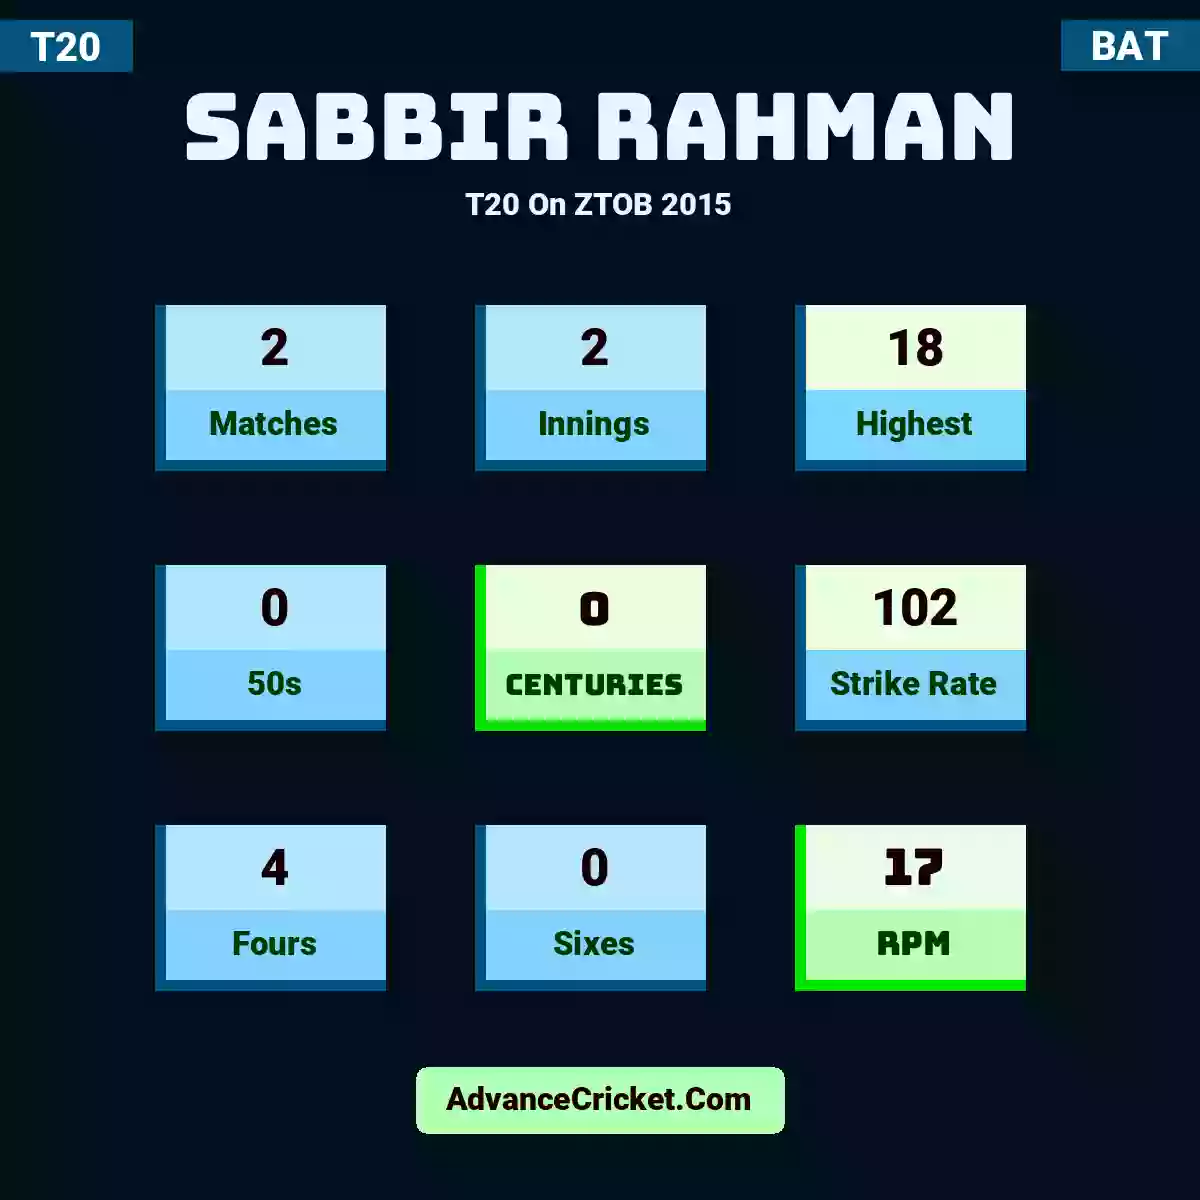 Sabbir Rahman T20  On ZTOB 2015, Sabbir Rahman played 2 matches, scored 18 runs as highest, 0 half-centuries, and 0 centuries, with a strike rate of 102. S.Rahman hit 4 fours and 0 sixes, with an RPM of 17.